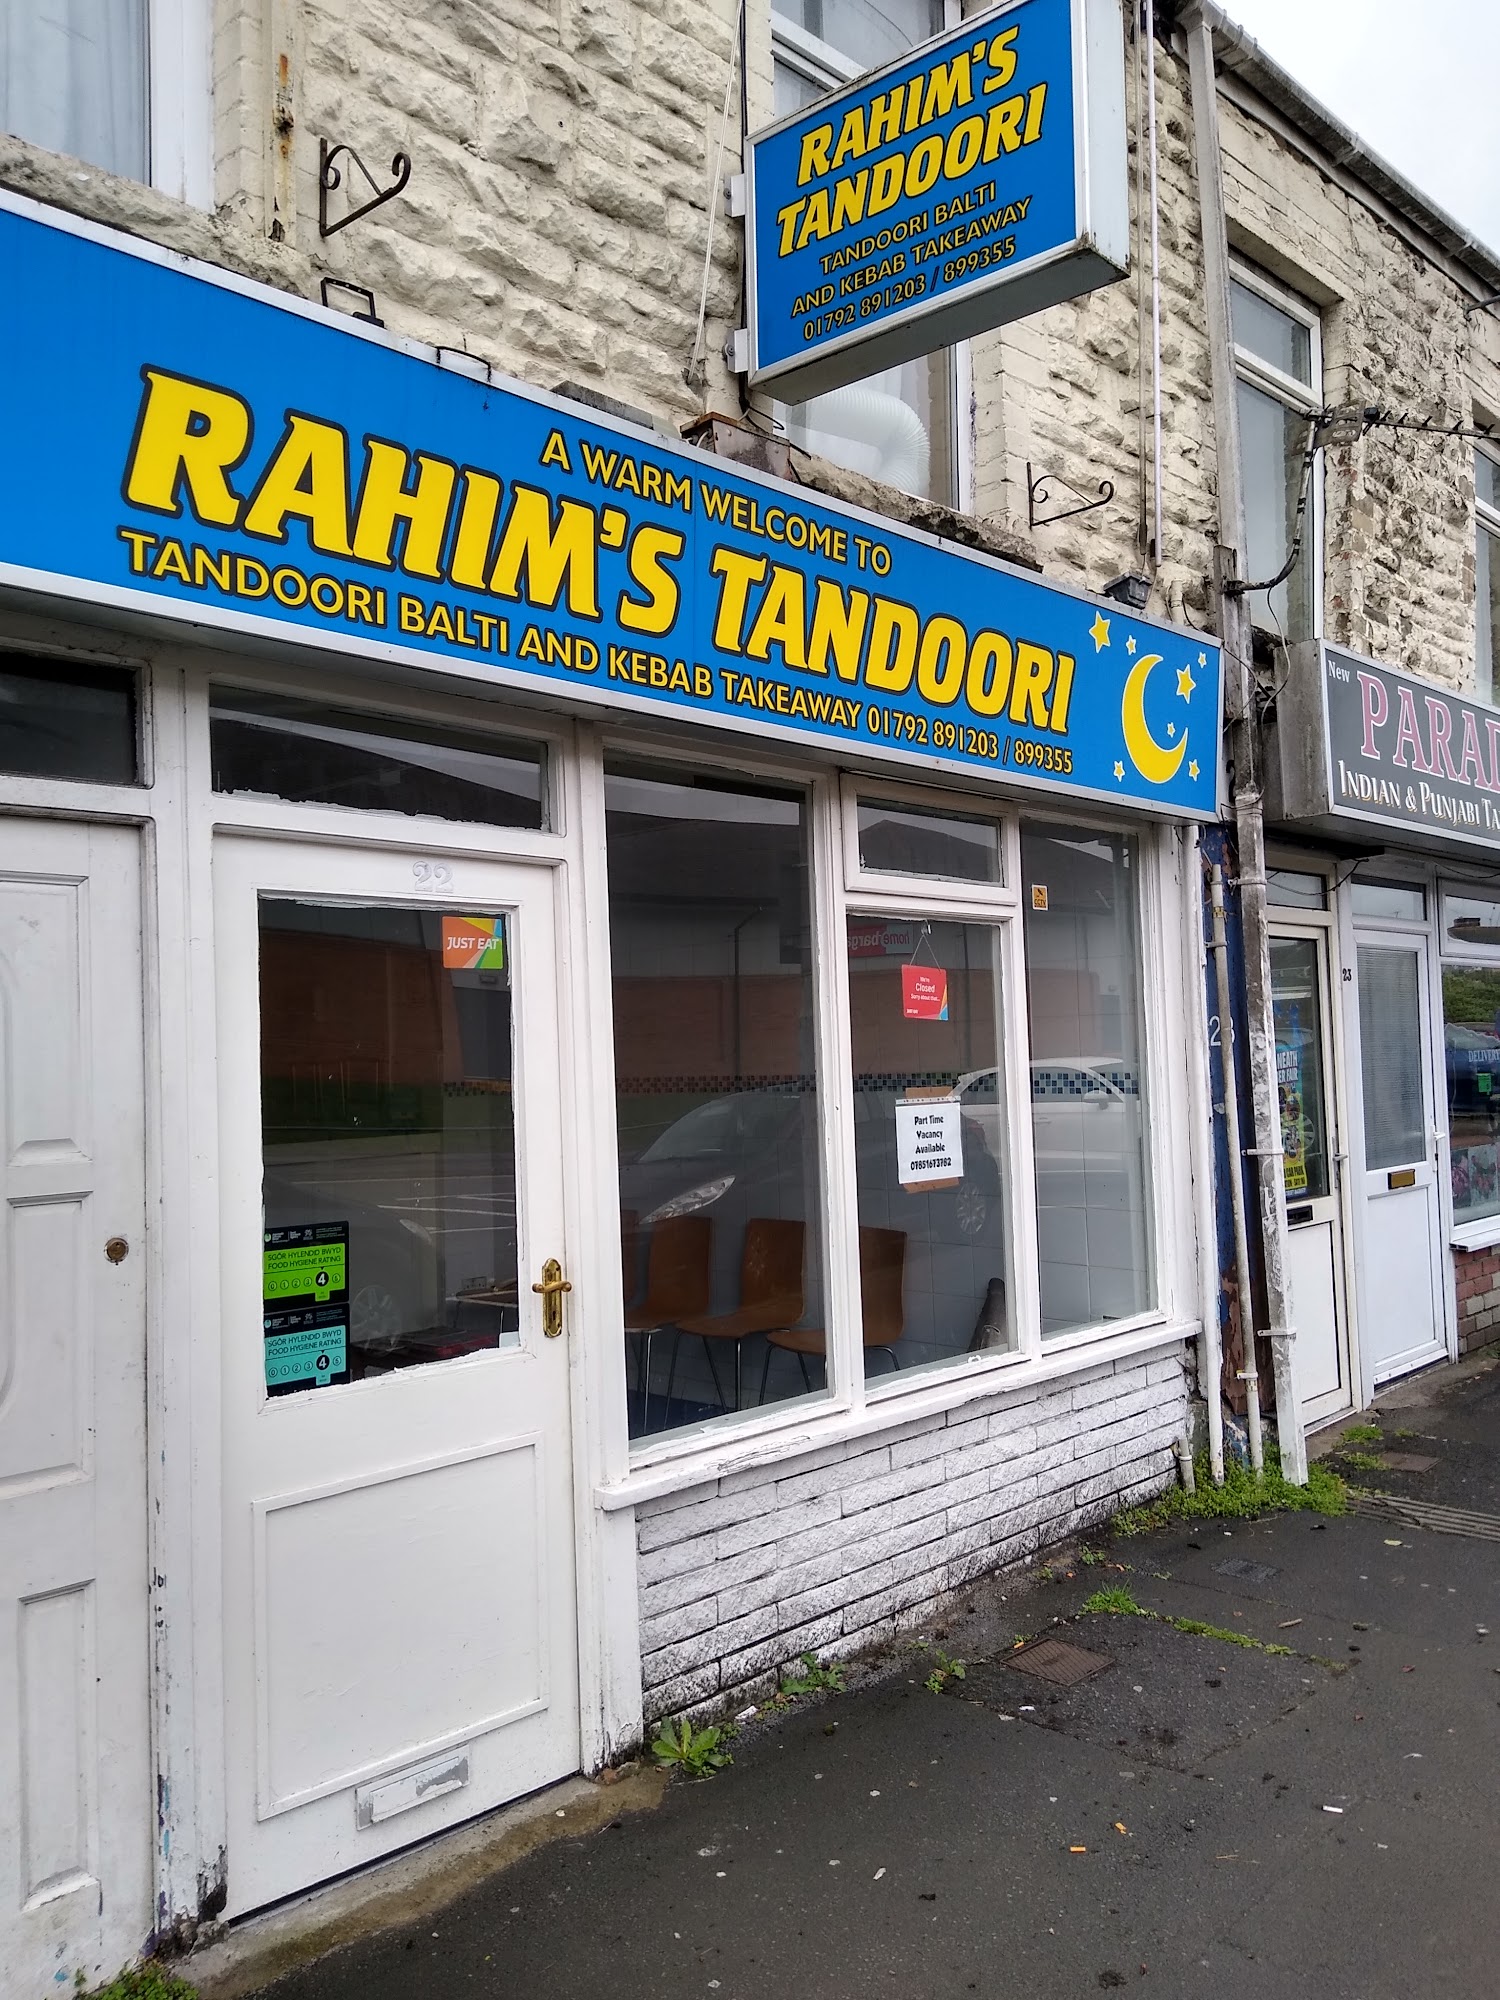 Rahim's Tandoori